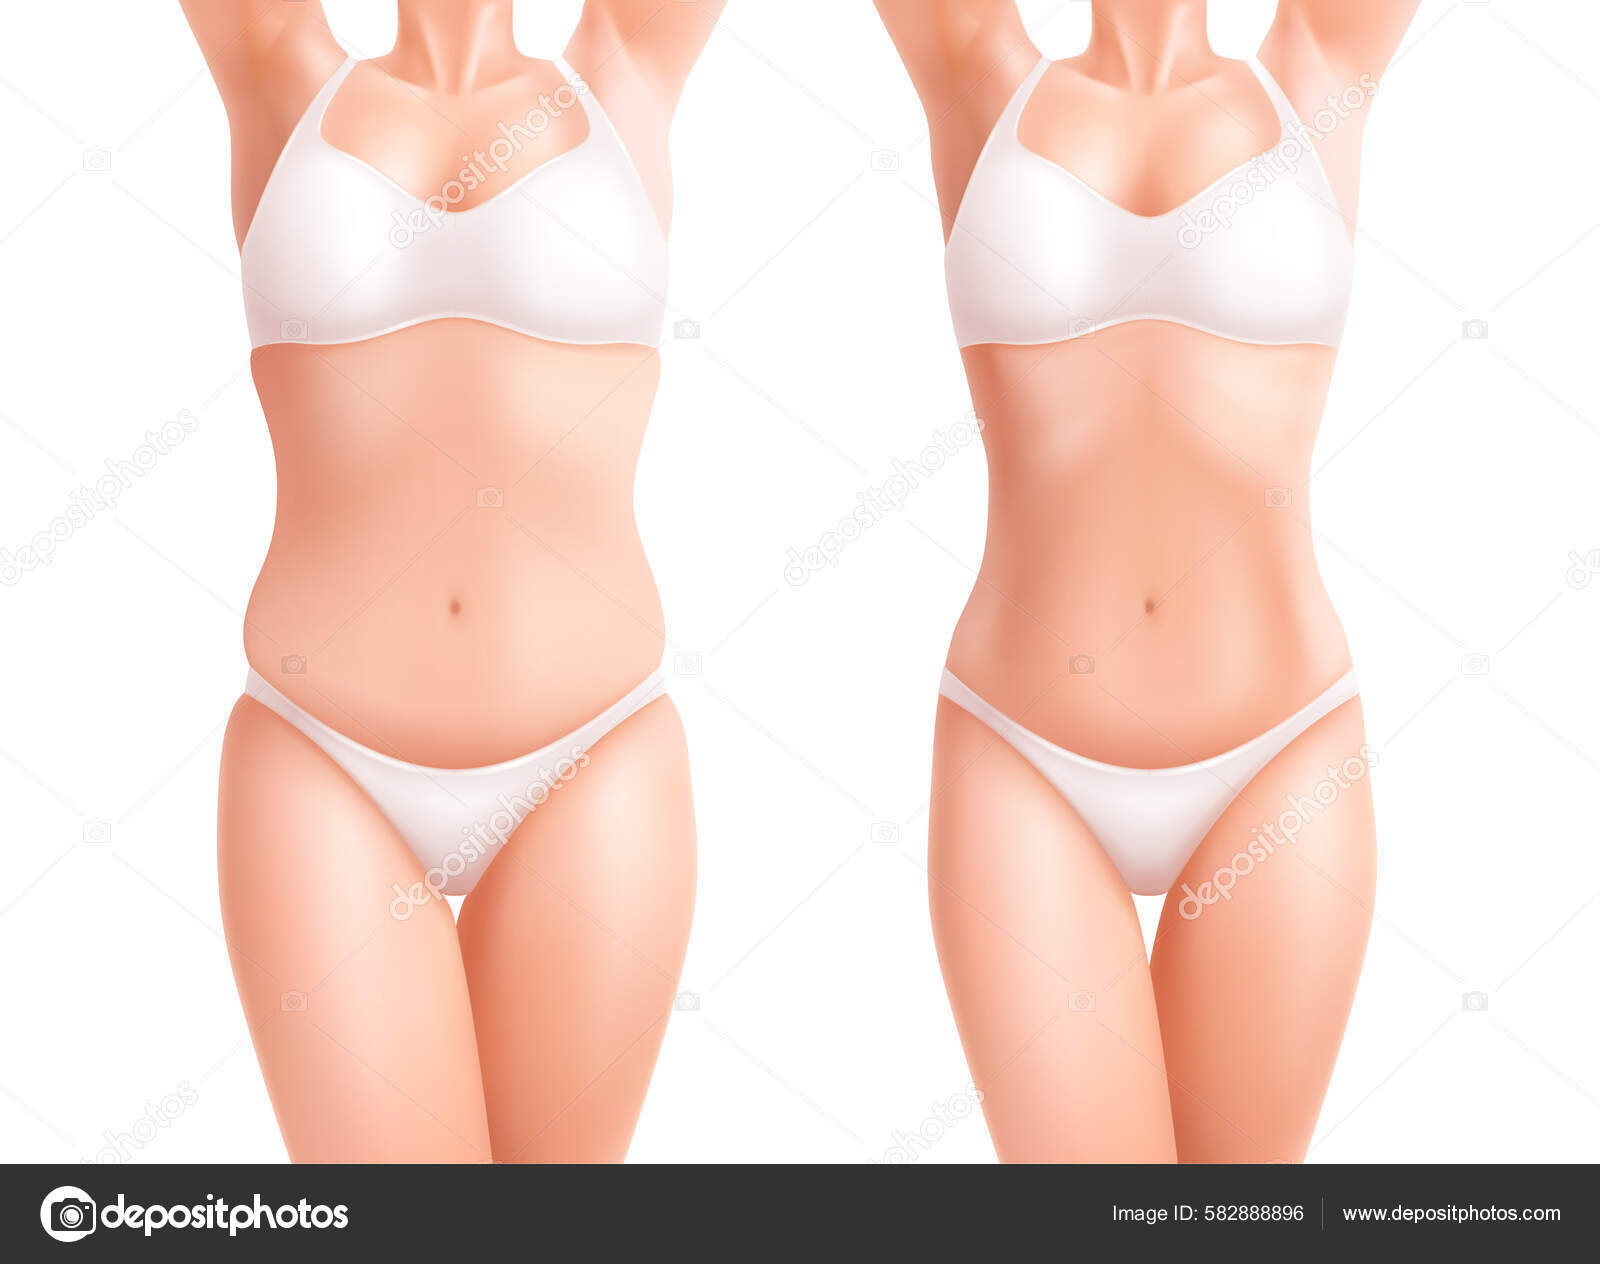 https://st.depositphotos.com/2885805/58288/v/1600/depositphotos_582888896-stock-illustration-female-woman-weight-body-set.jpg